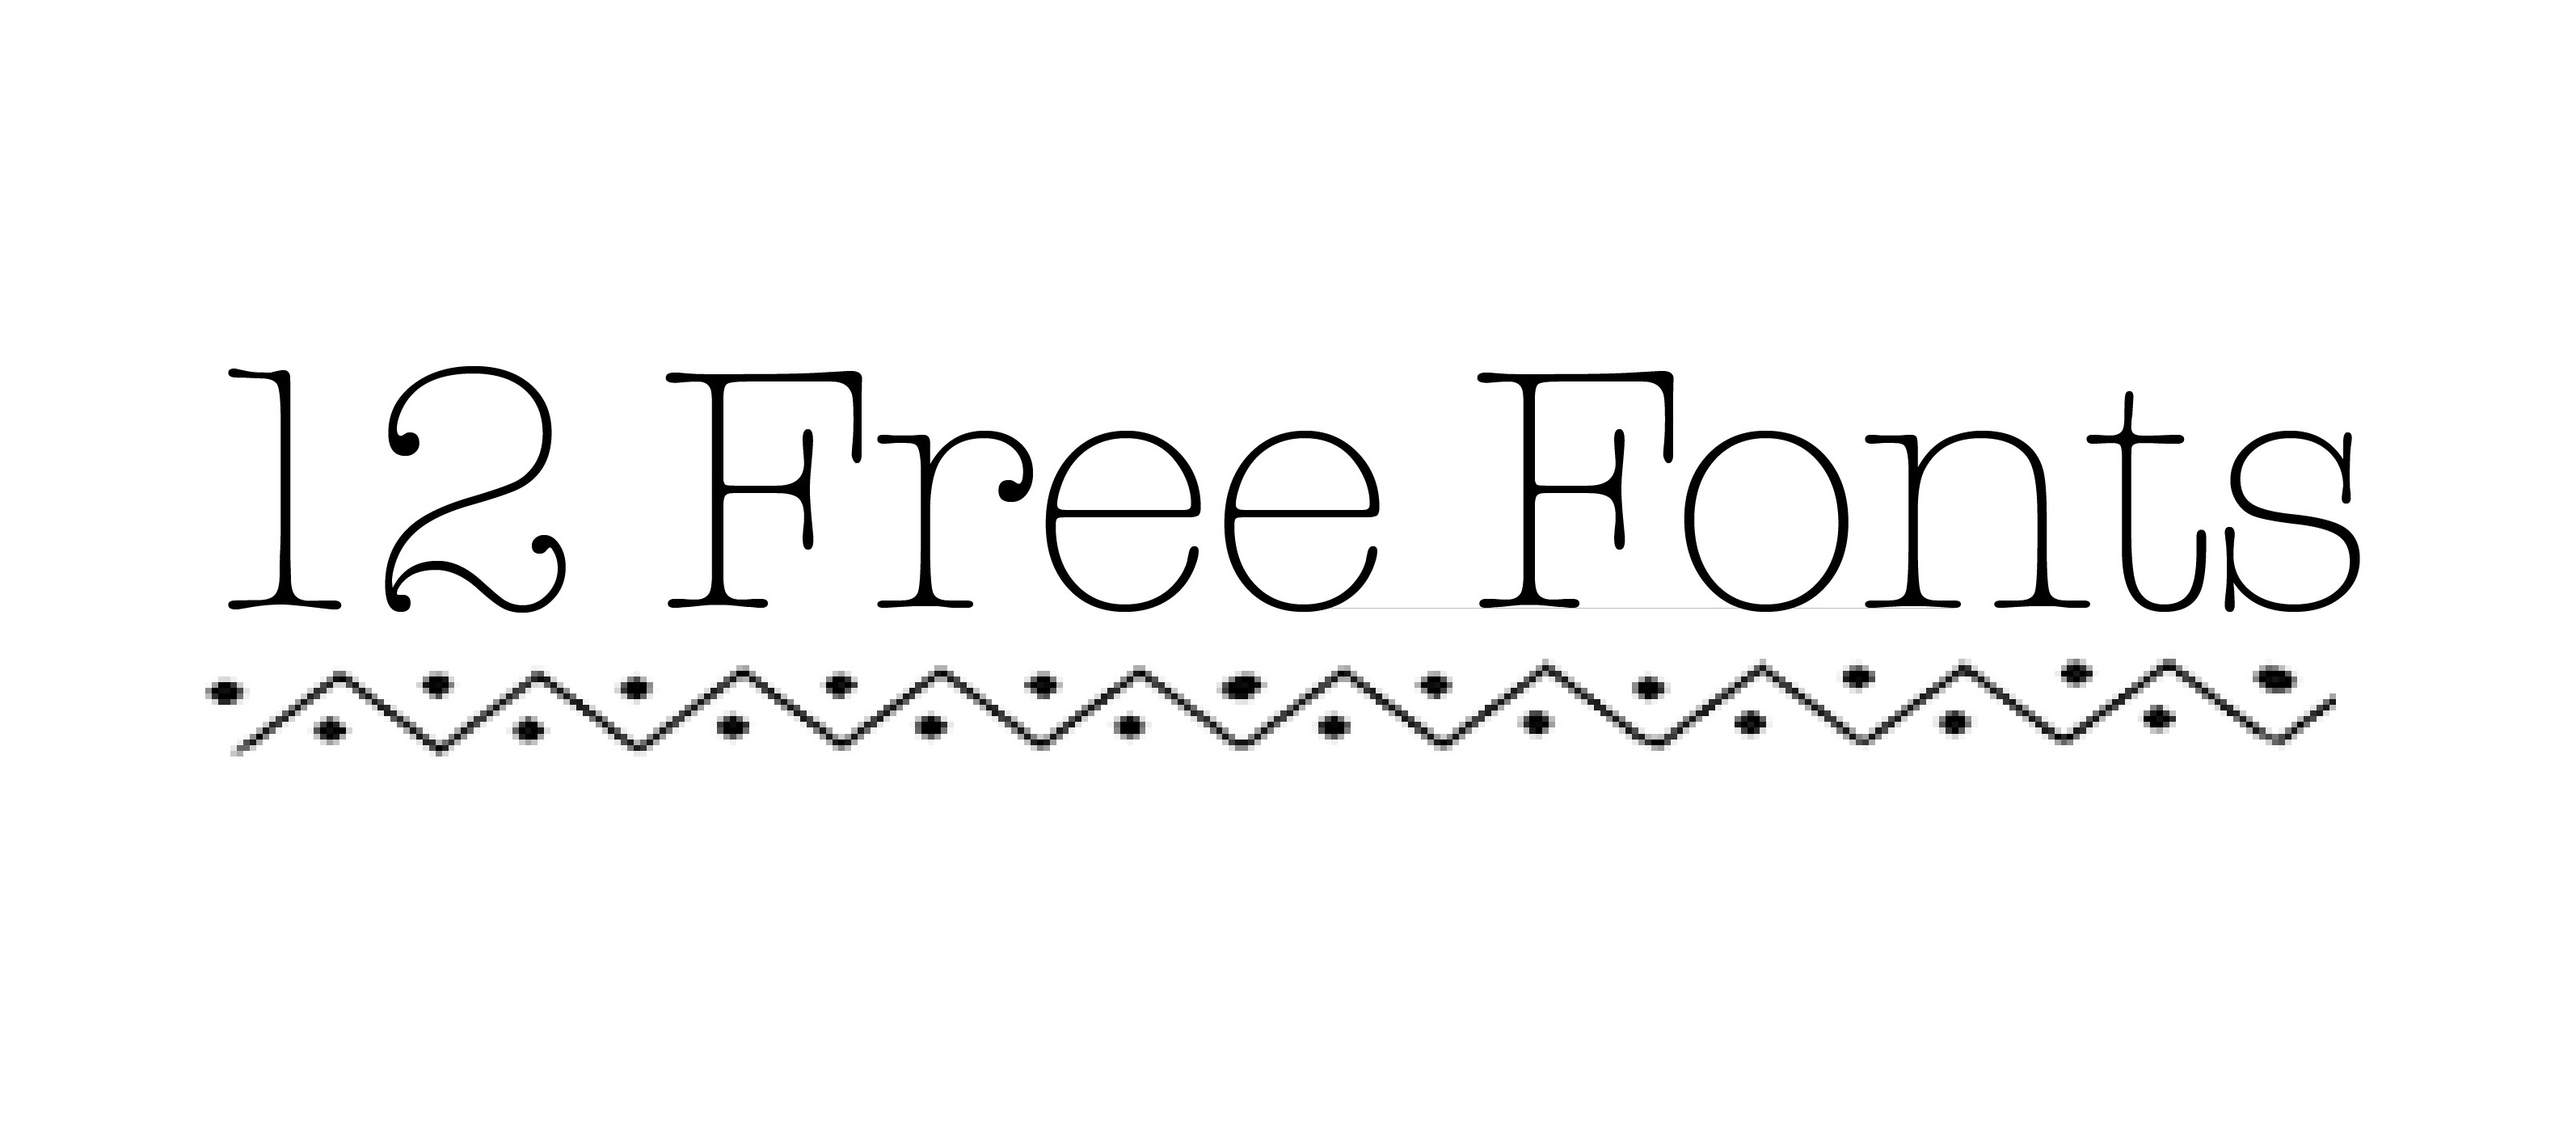 12 free fonts header pic